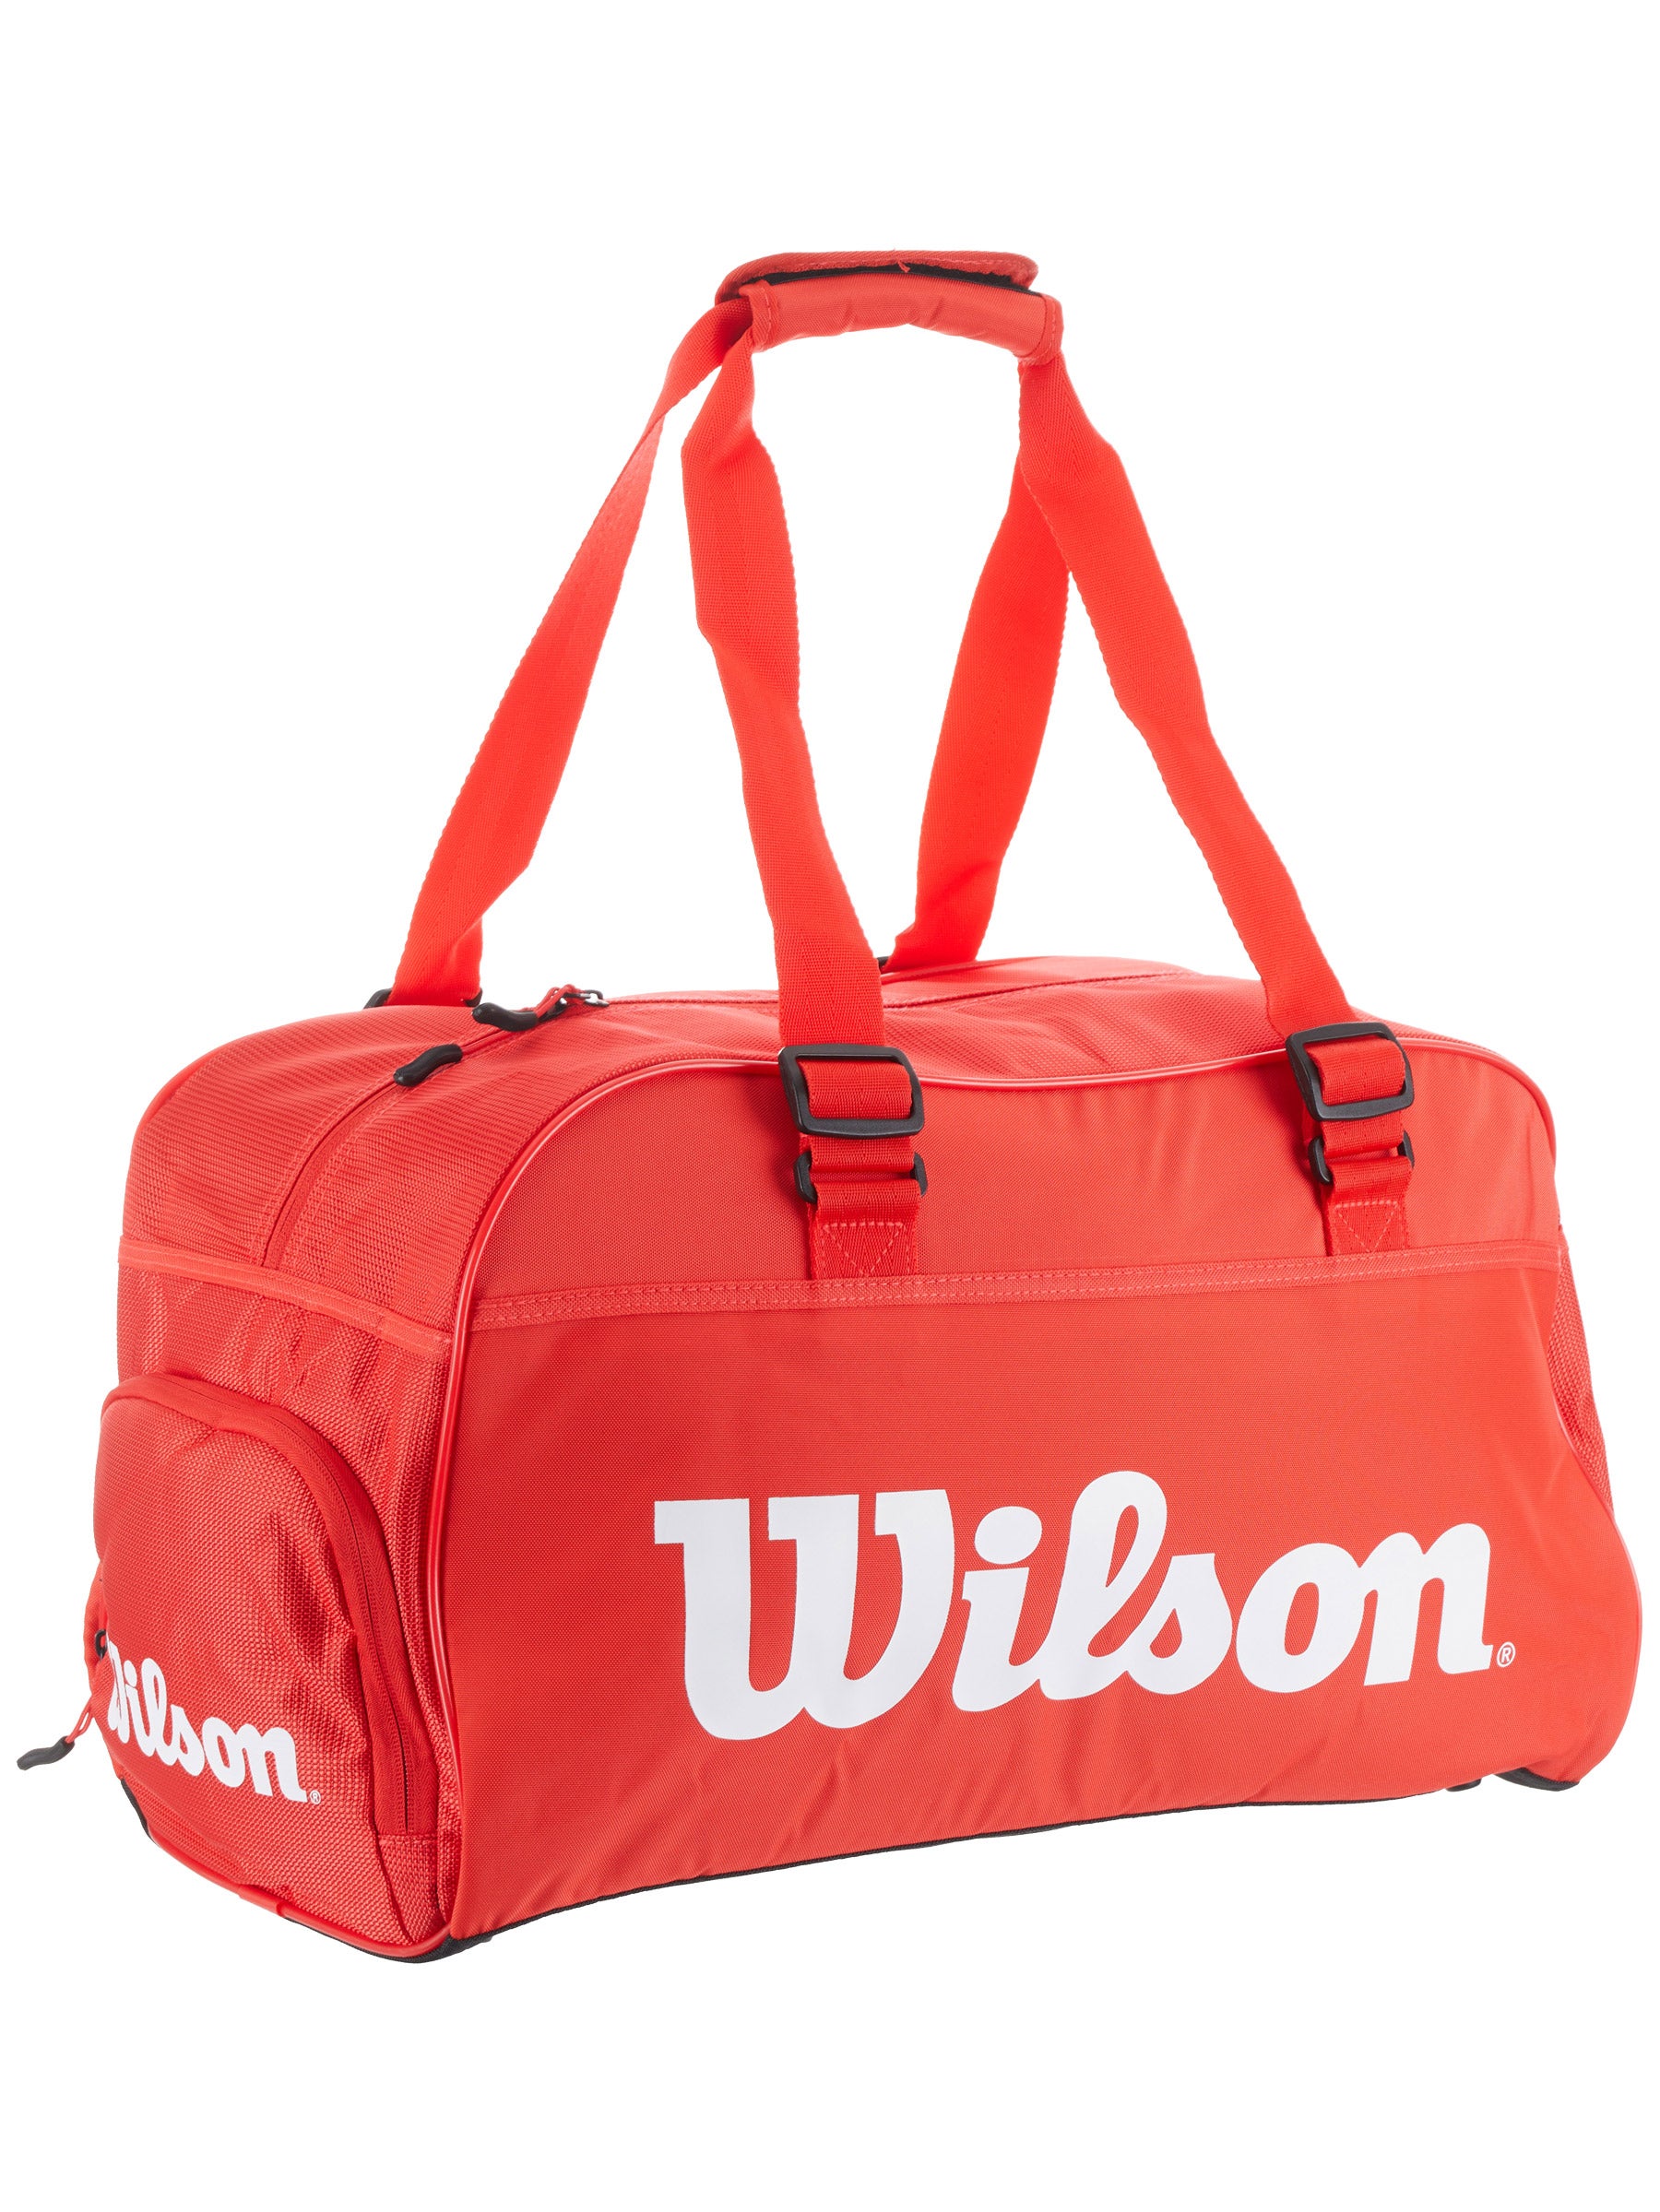 BRAND new WILSON CLASH Tennis Duffle Bag Small Duffel FREE SHIPPING Smoke Free 